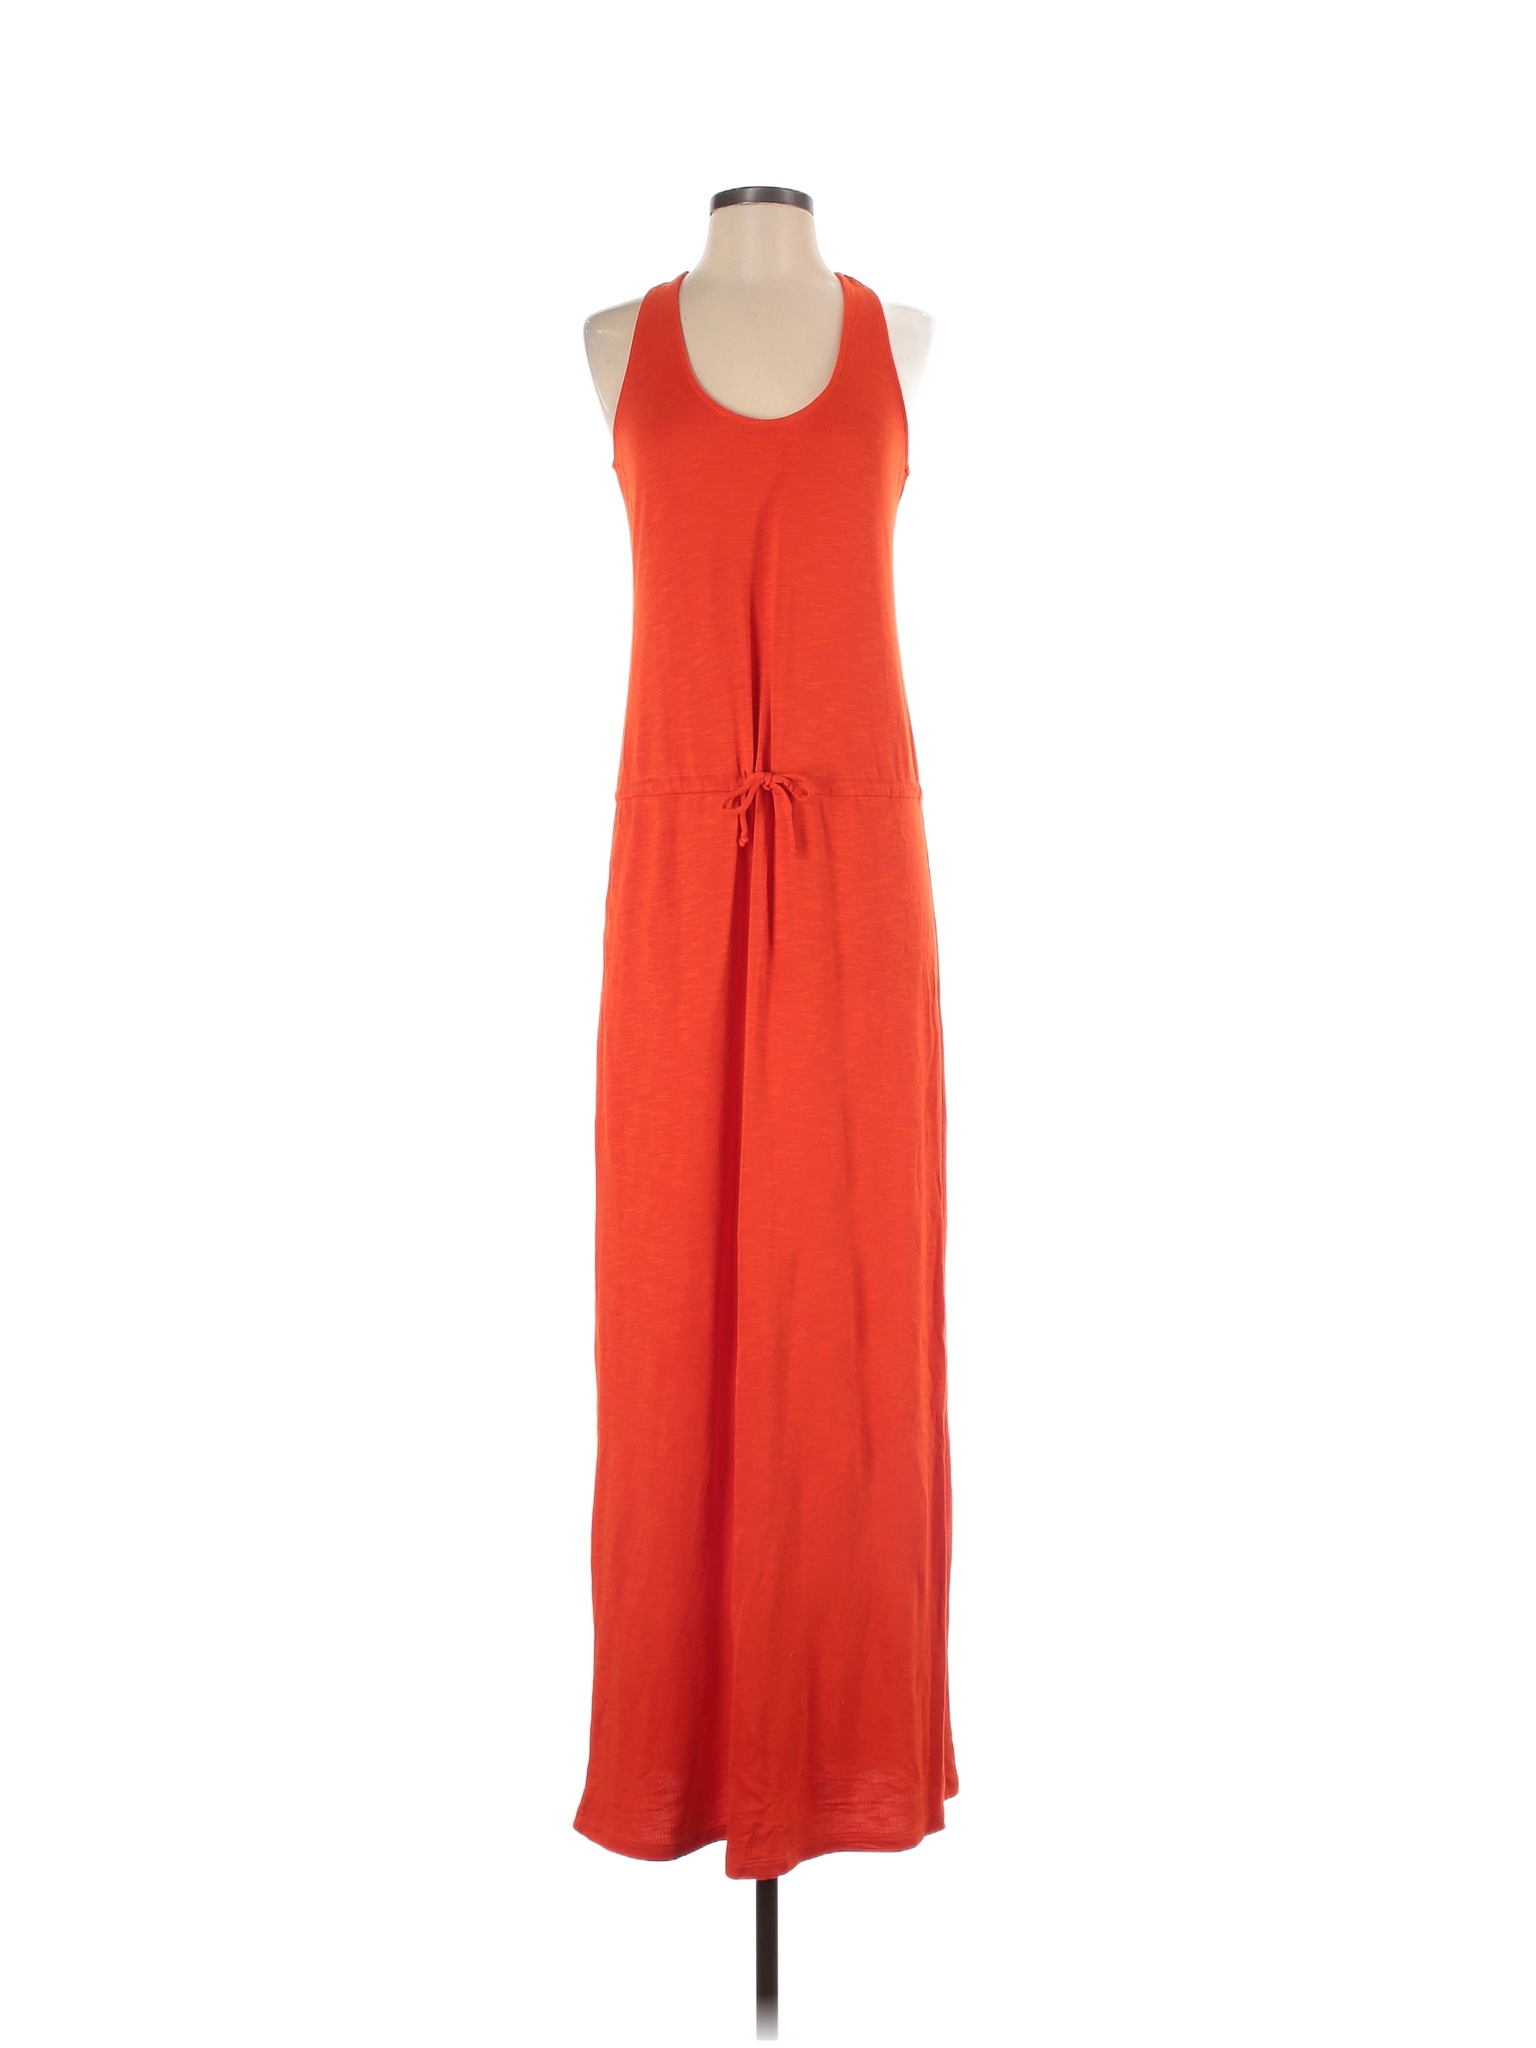 Lanston Solid Orange Casual Dress Size S - 88% off | thredUP